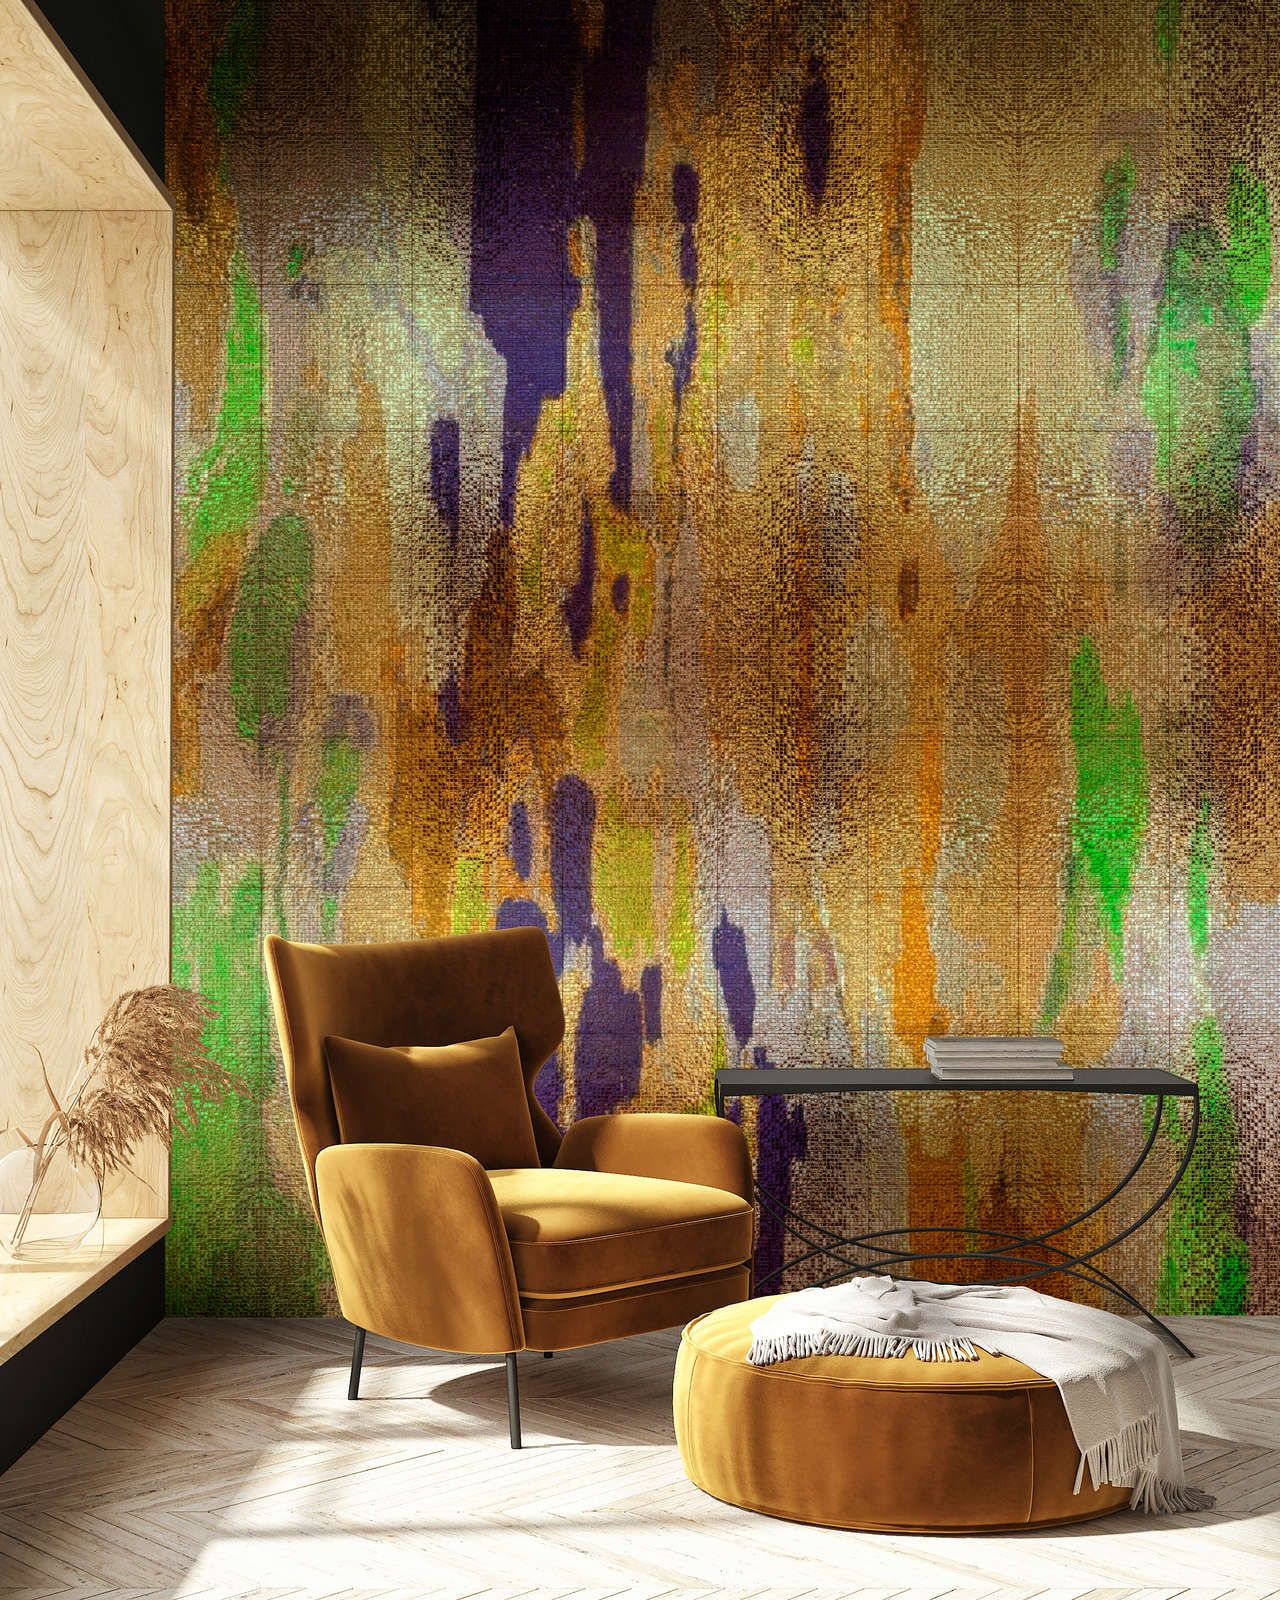             Digital behang »marielle 1« - Kleurverloop paars, goud, groen met mozaïekstructuur - Gladde, licht parelmoerglanzende vliesstof
        